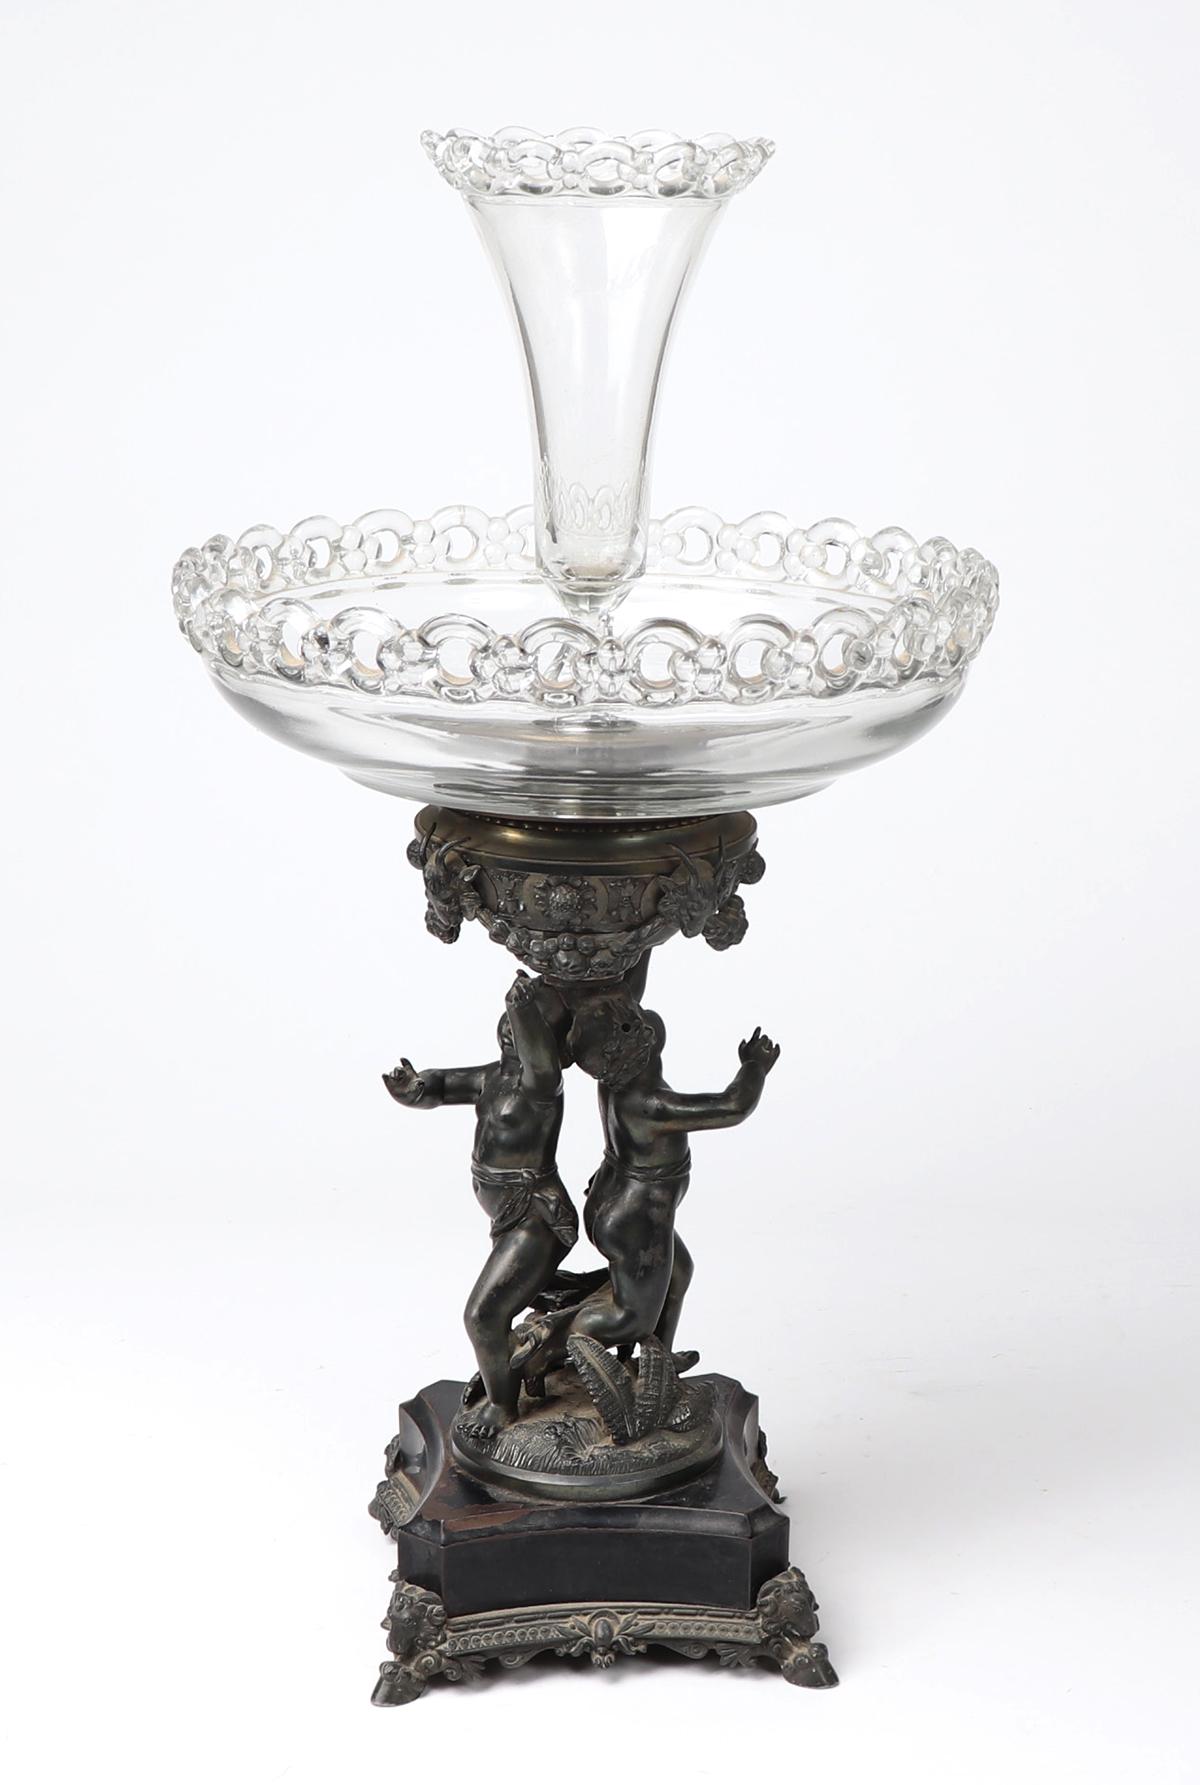 Victorian Figural Cherub Centerpiece with Glass Bowl